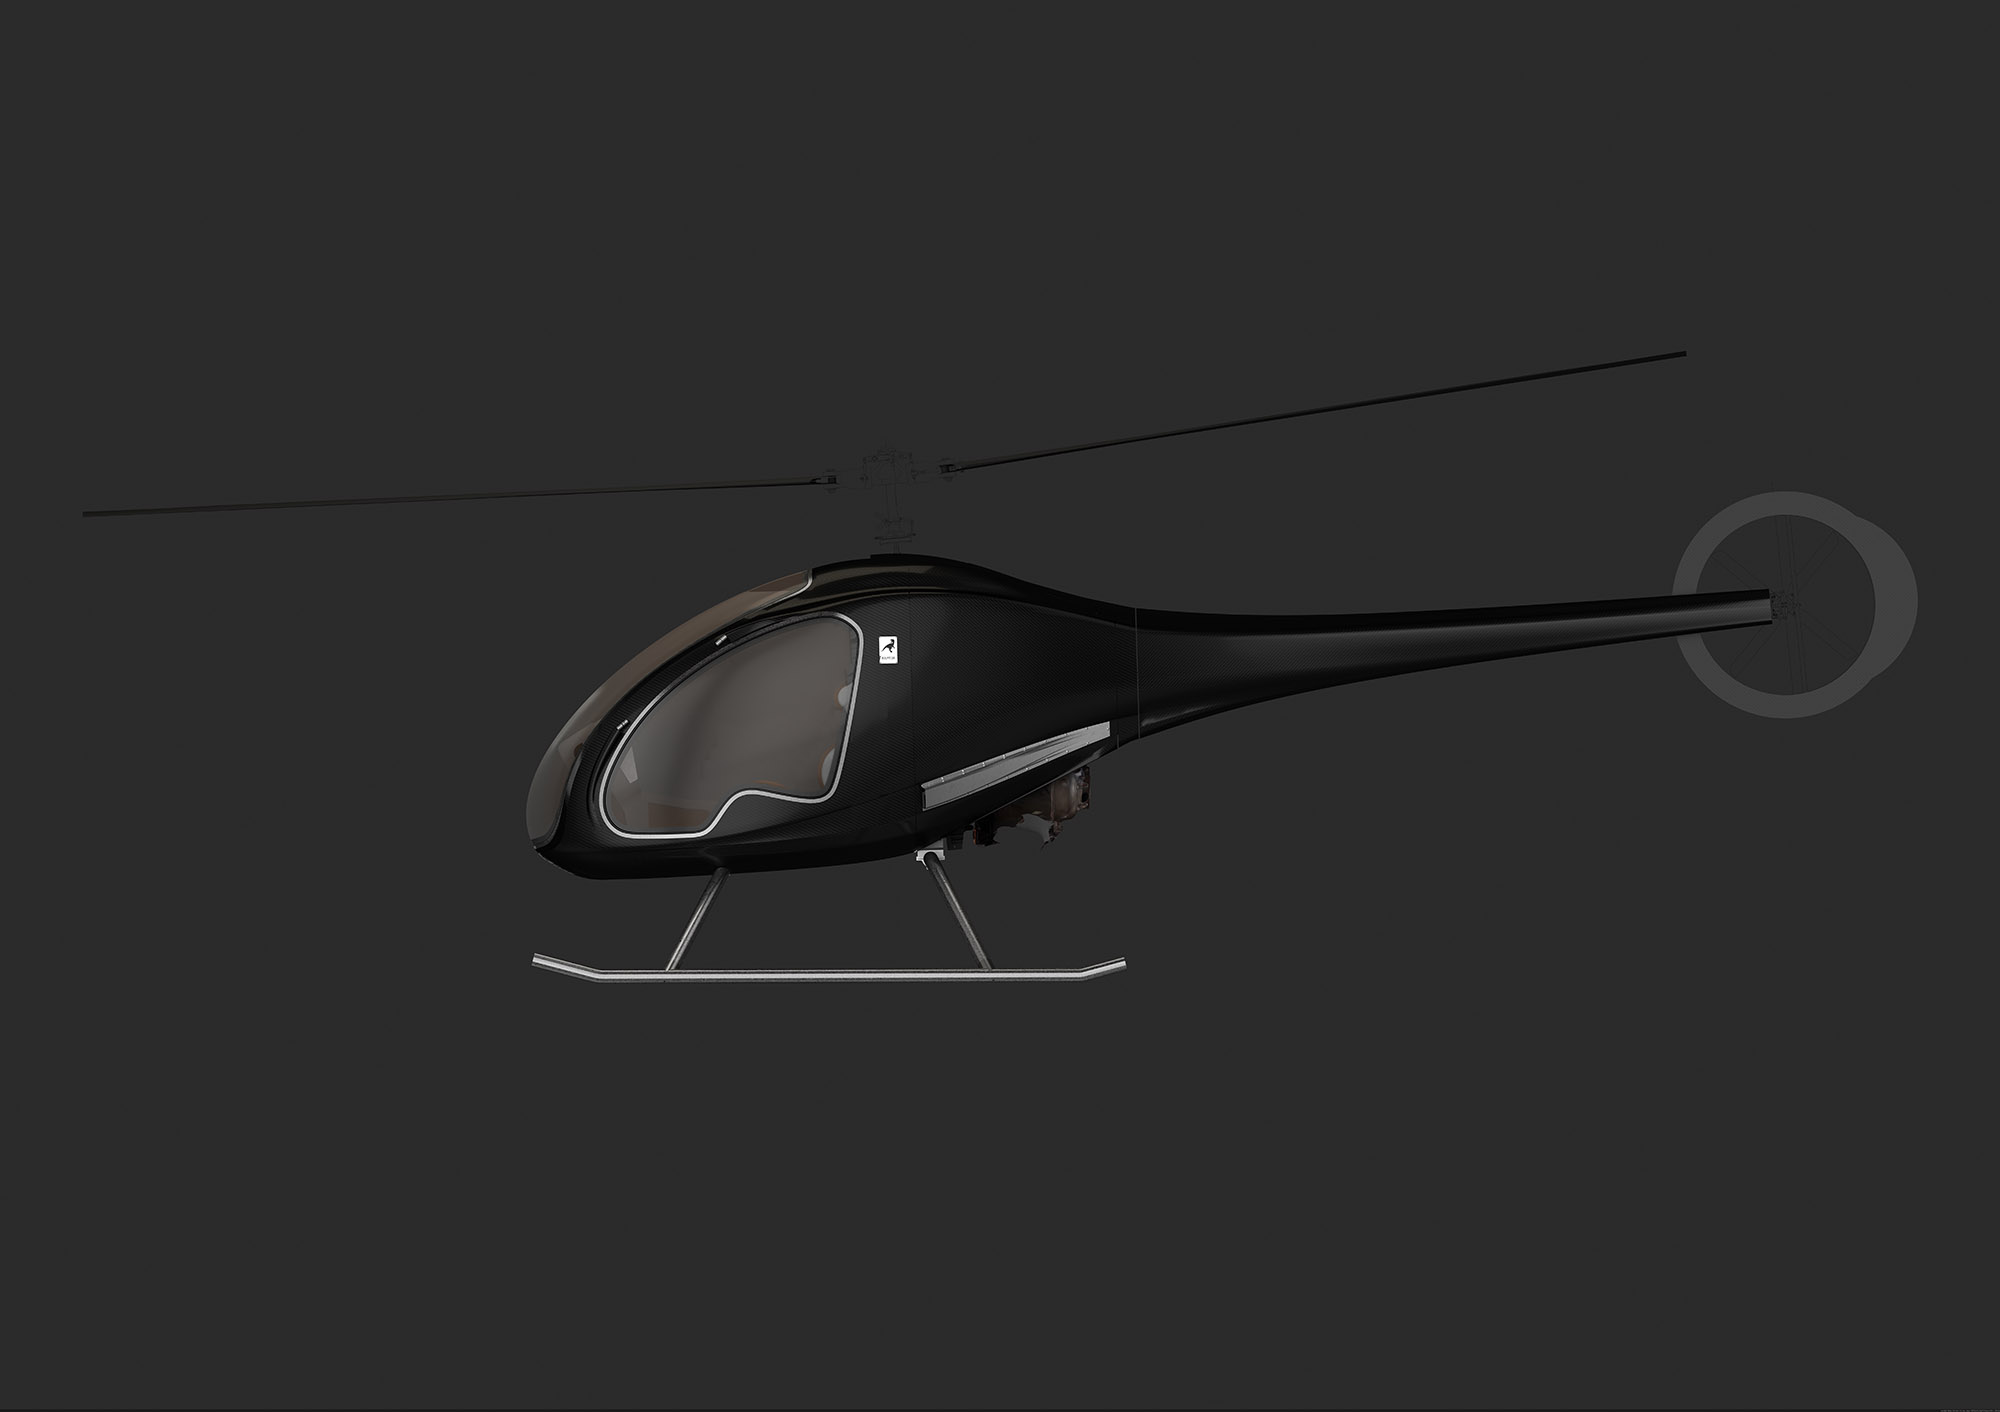 piranha jet helicopter